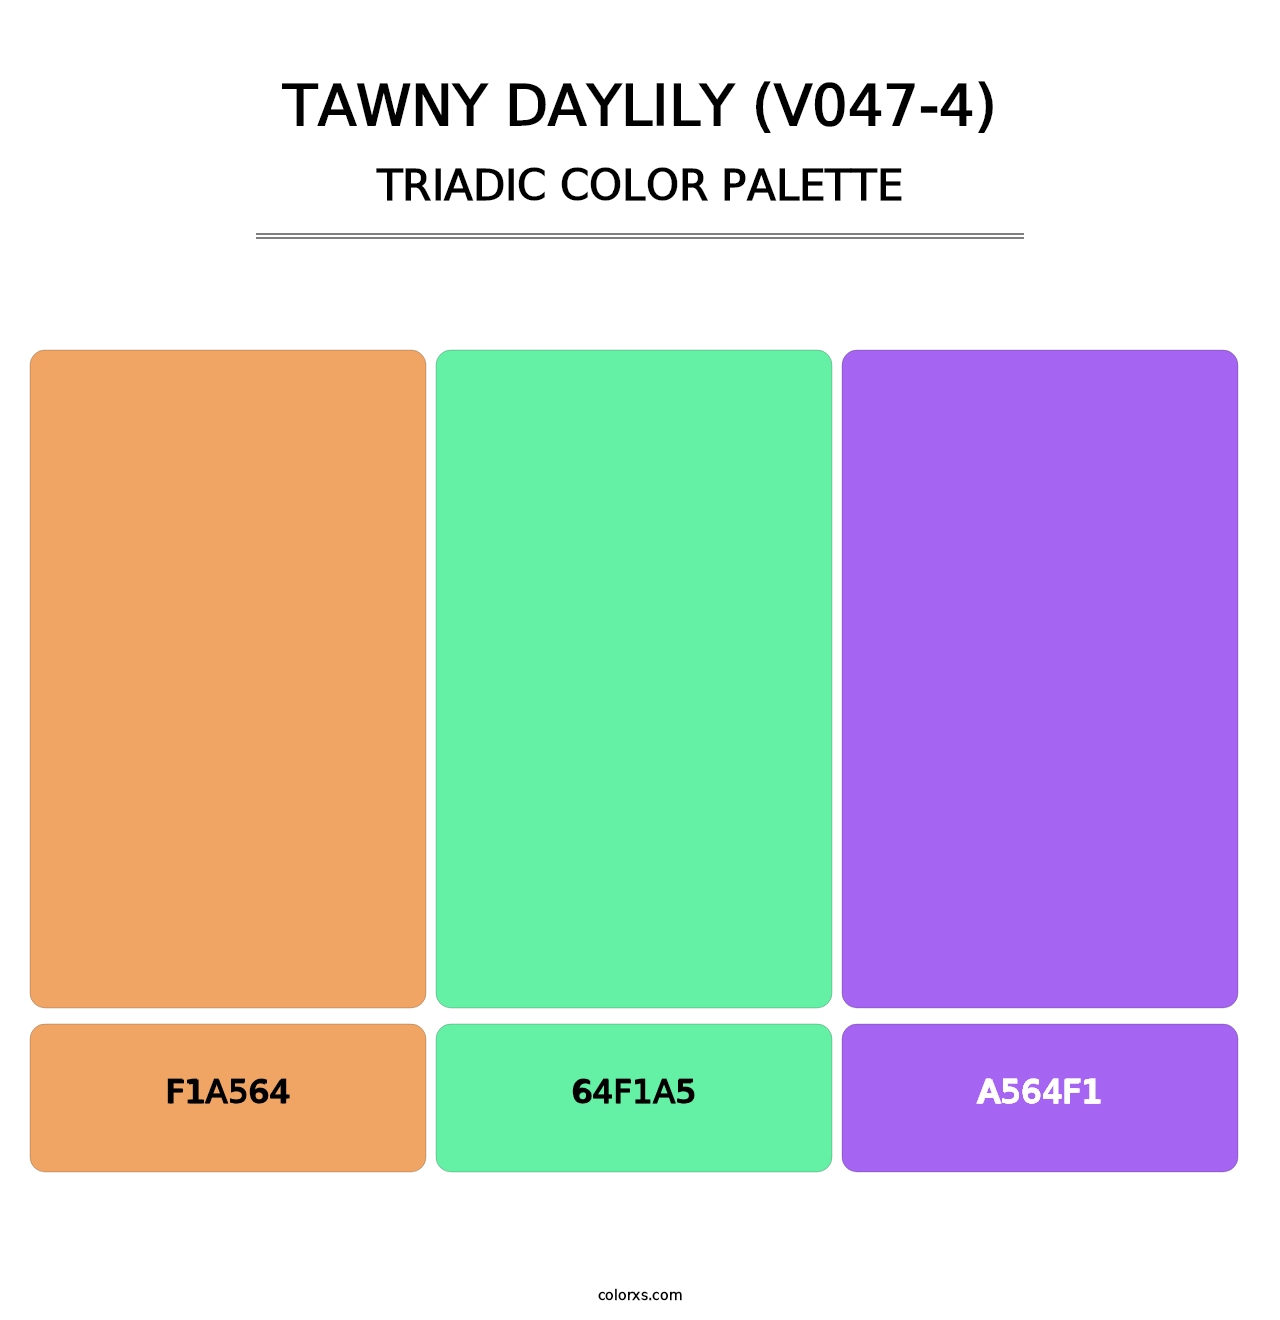 Tawny Daylily (V047-4) - Triadic Color Palette